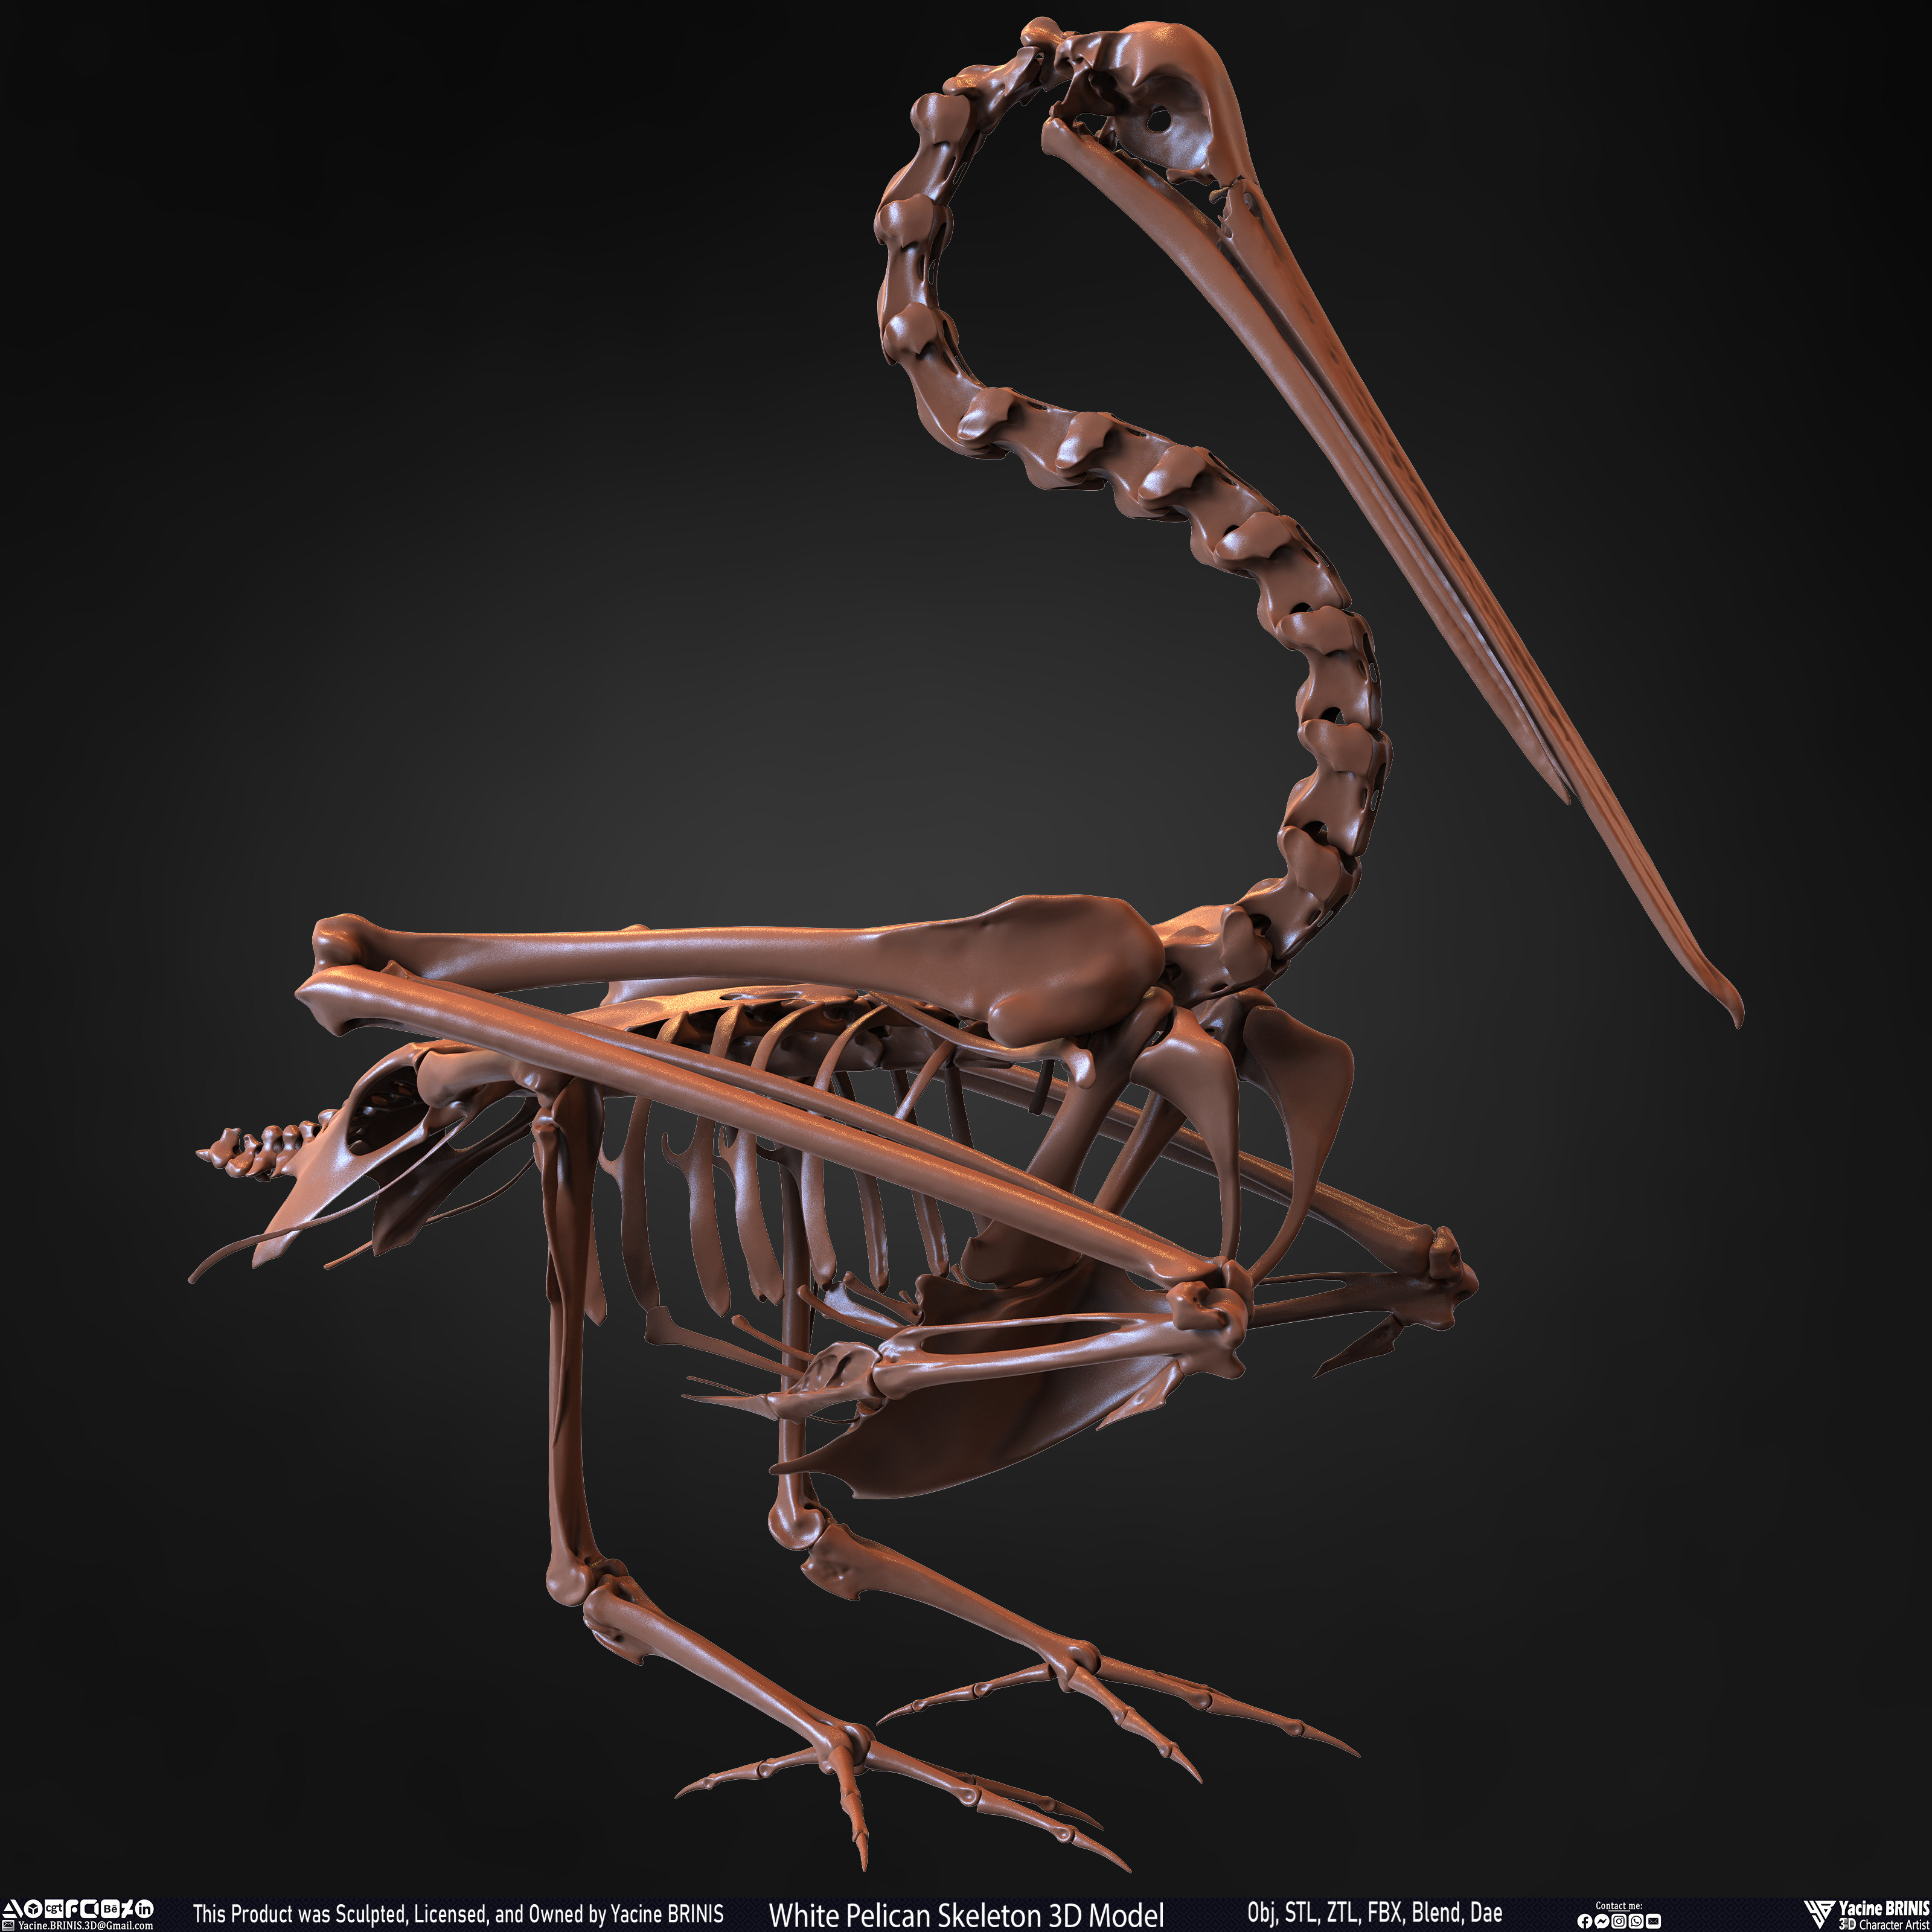 White Pelican Skeleton 3D Model Sculpted by Yacine BRINIS Set 017